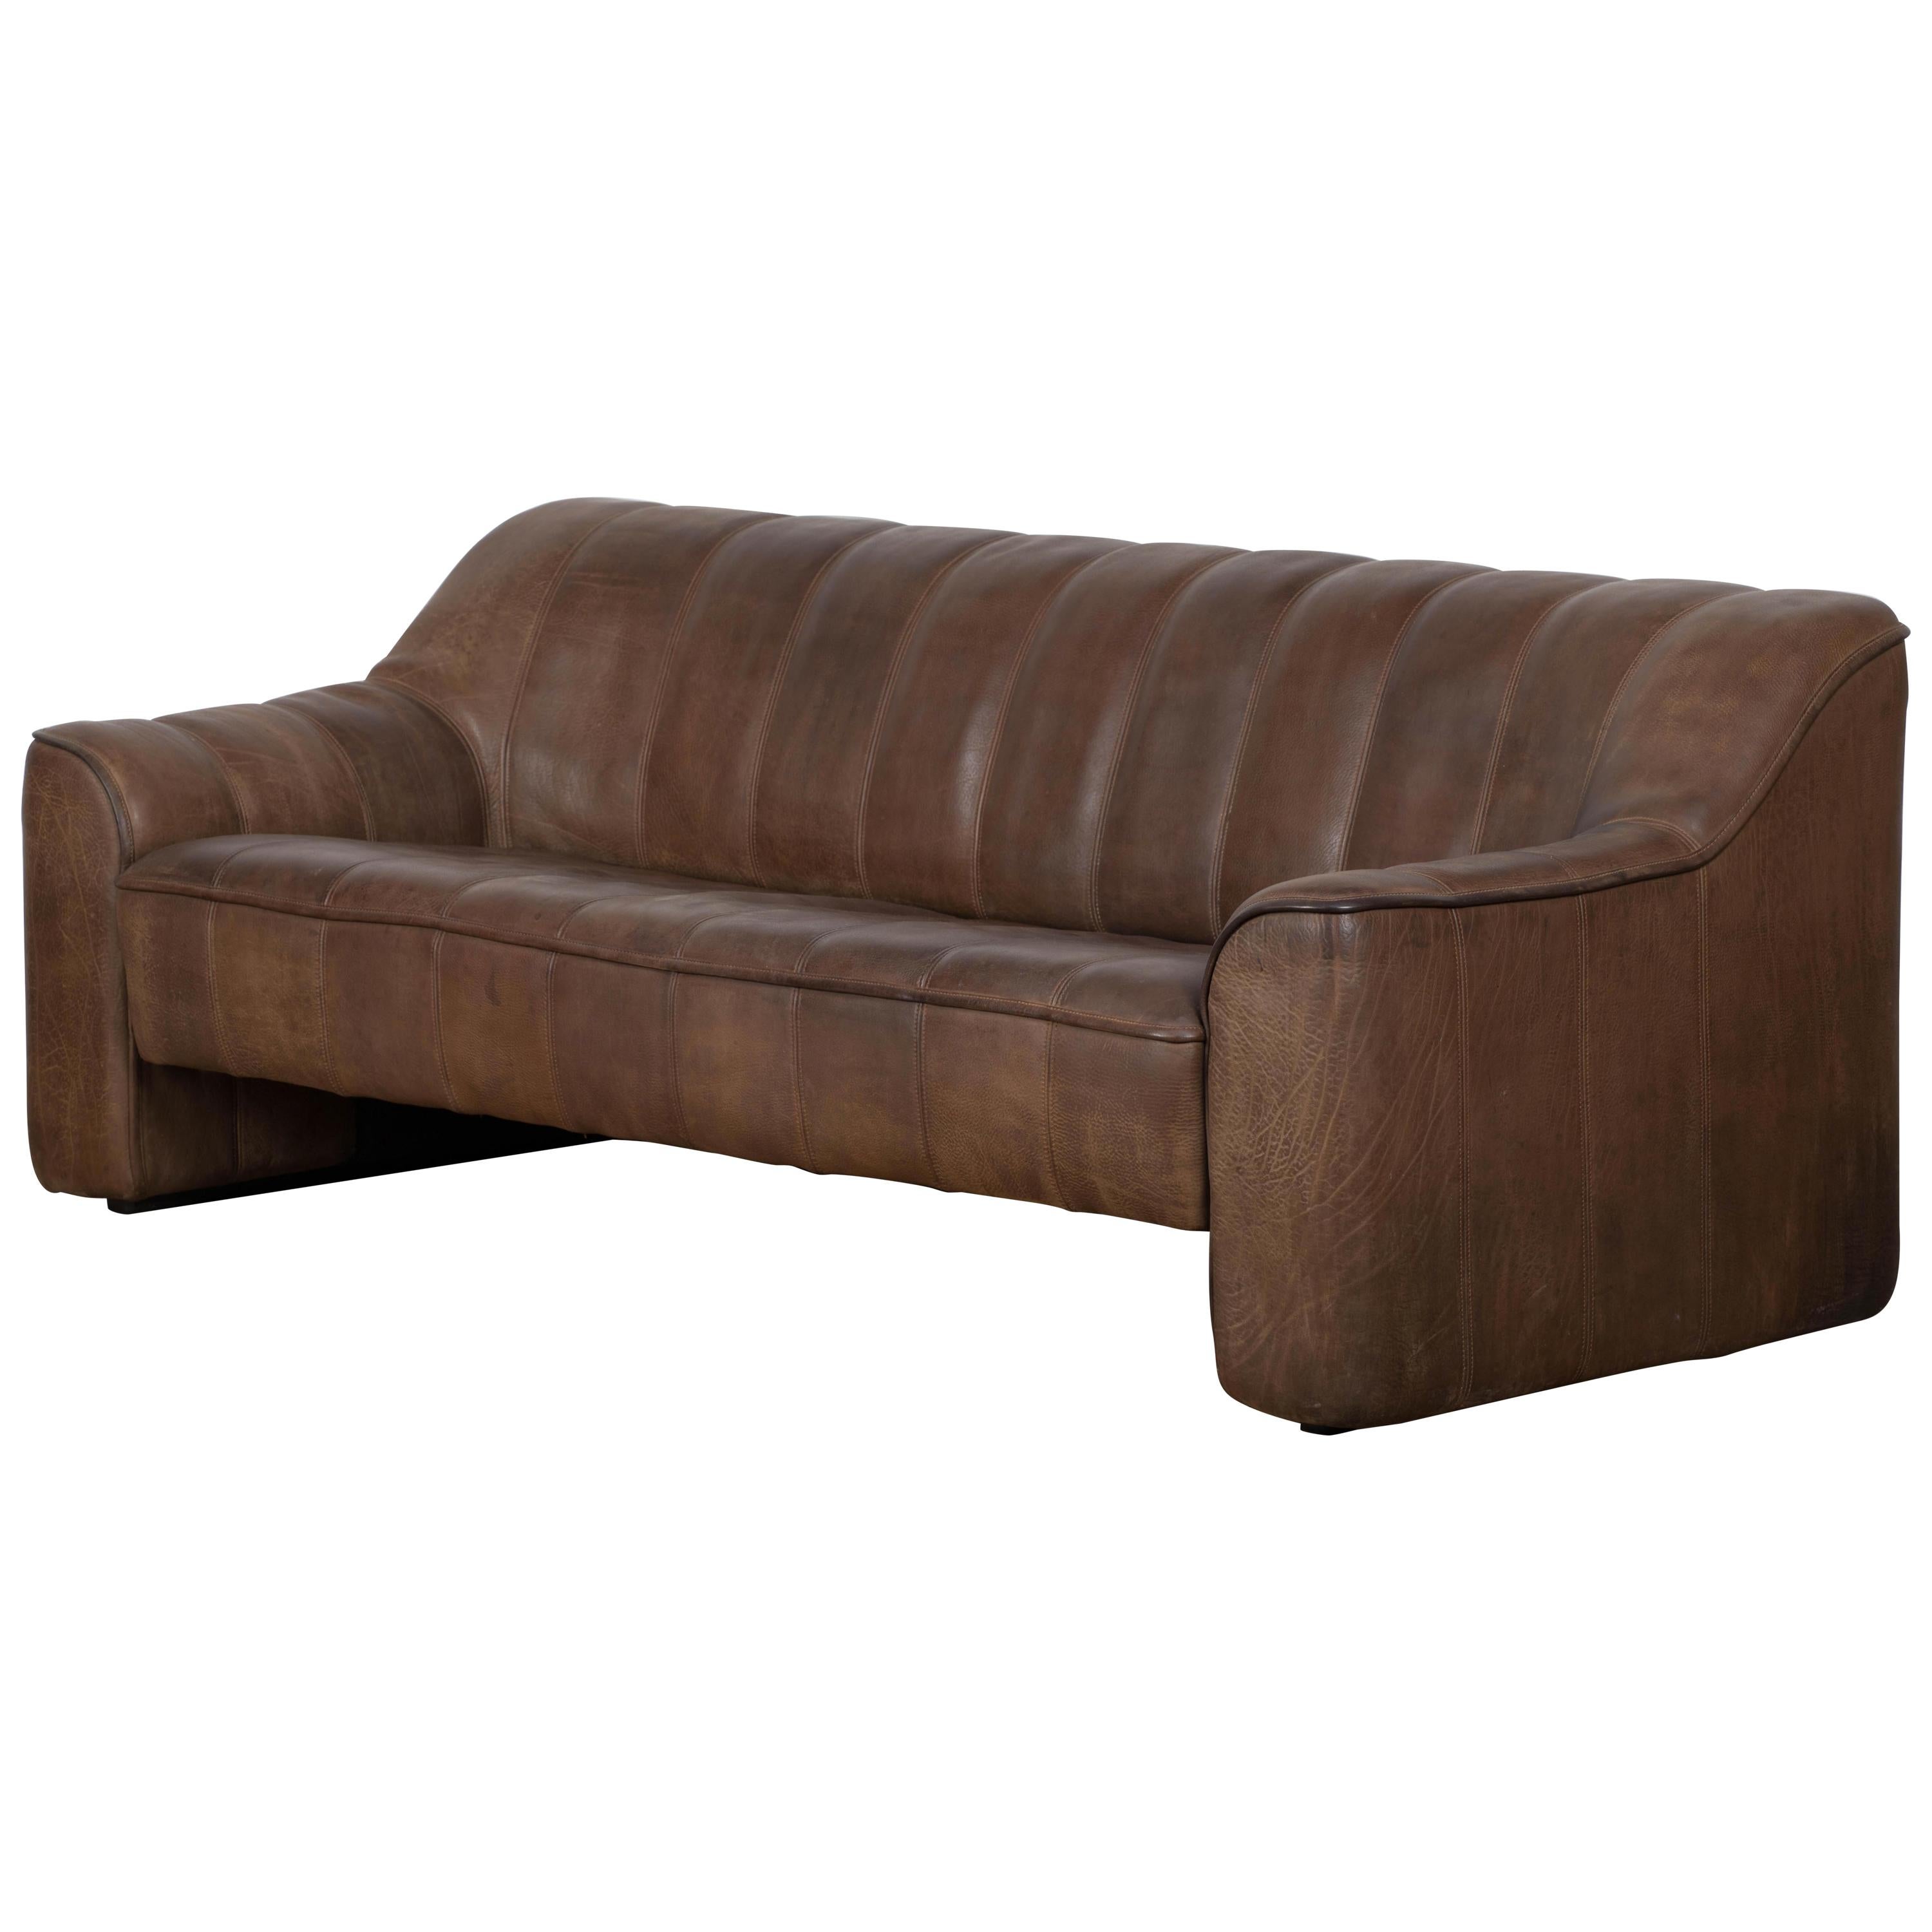 1970er Jahre Vintage De Sede DS 44 Dreisitzer-Sofa aus braunem, dunklem Cognacfarbenem Buffalo-Leder